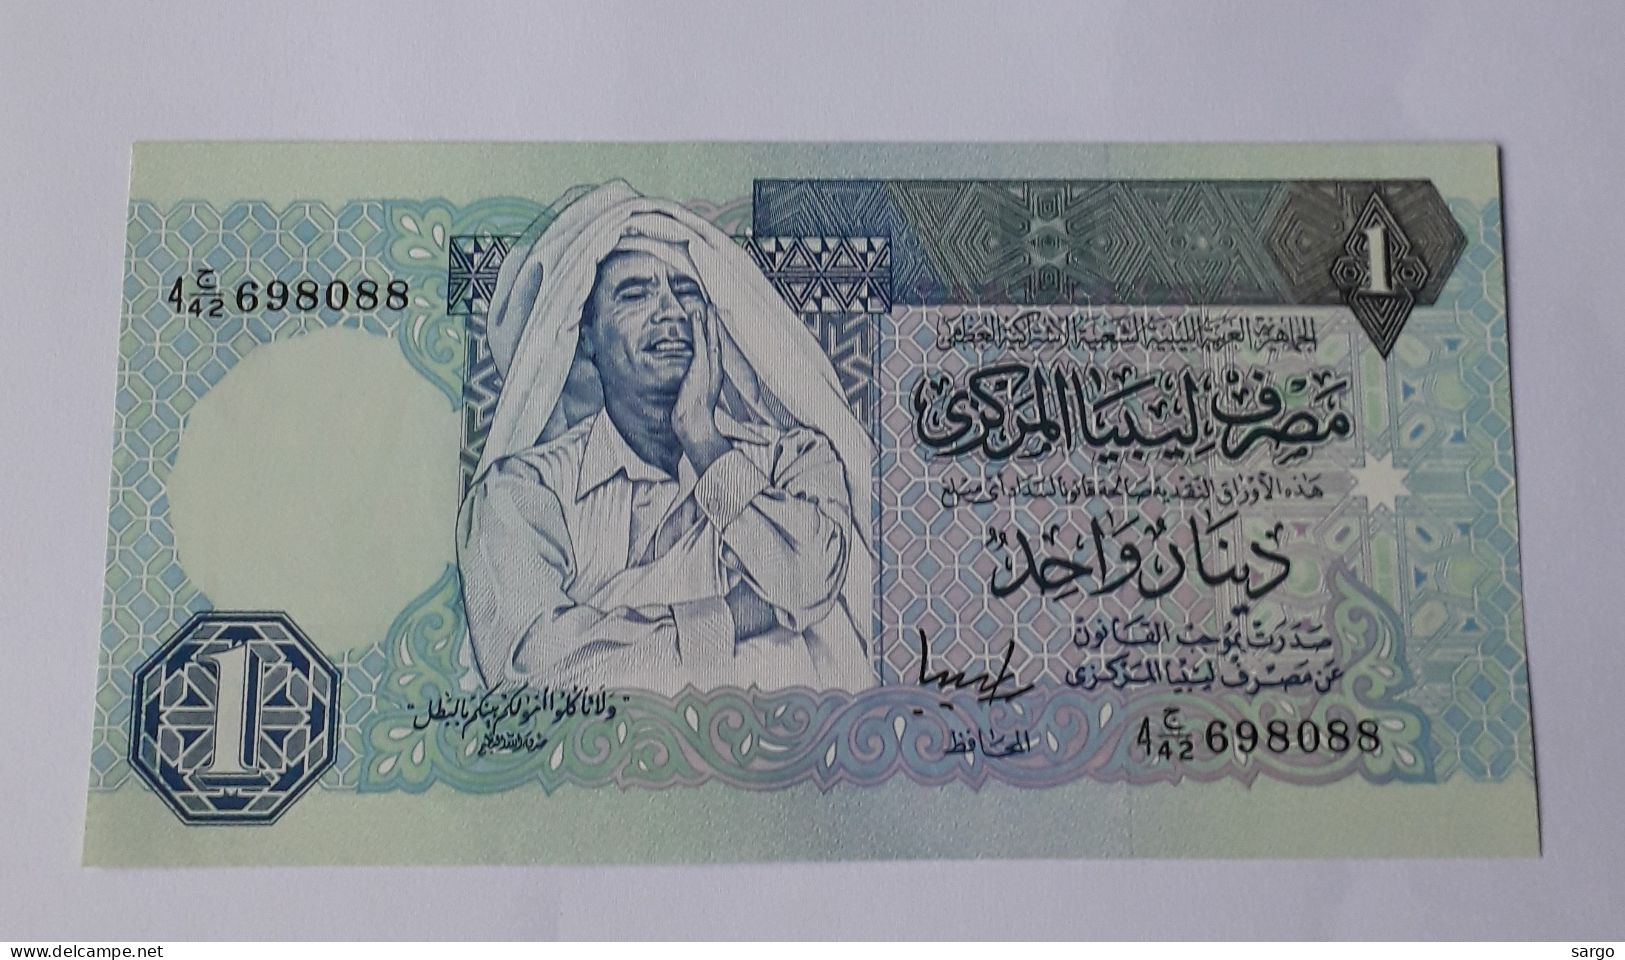 LIBYA - 1 DINAR - 1991 -  P 59b  - UNC - BANKNOTES - PAPER MONEY - CARTAMONETA - - Libyen